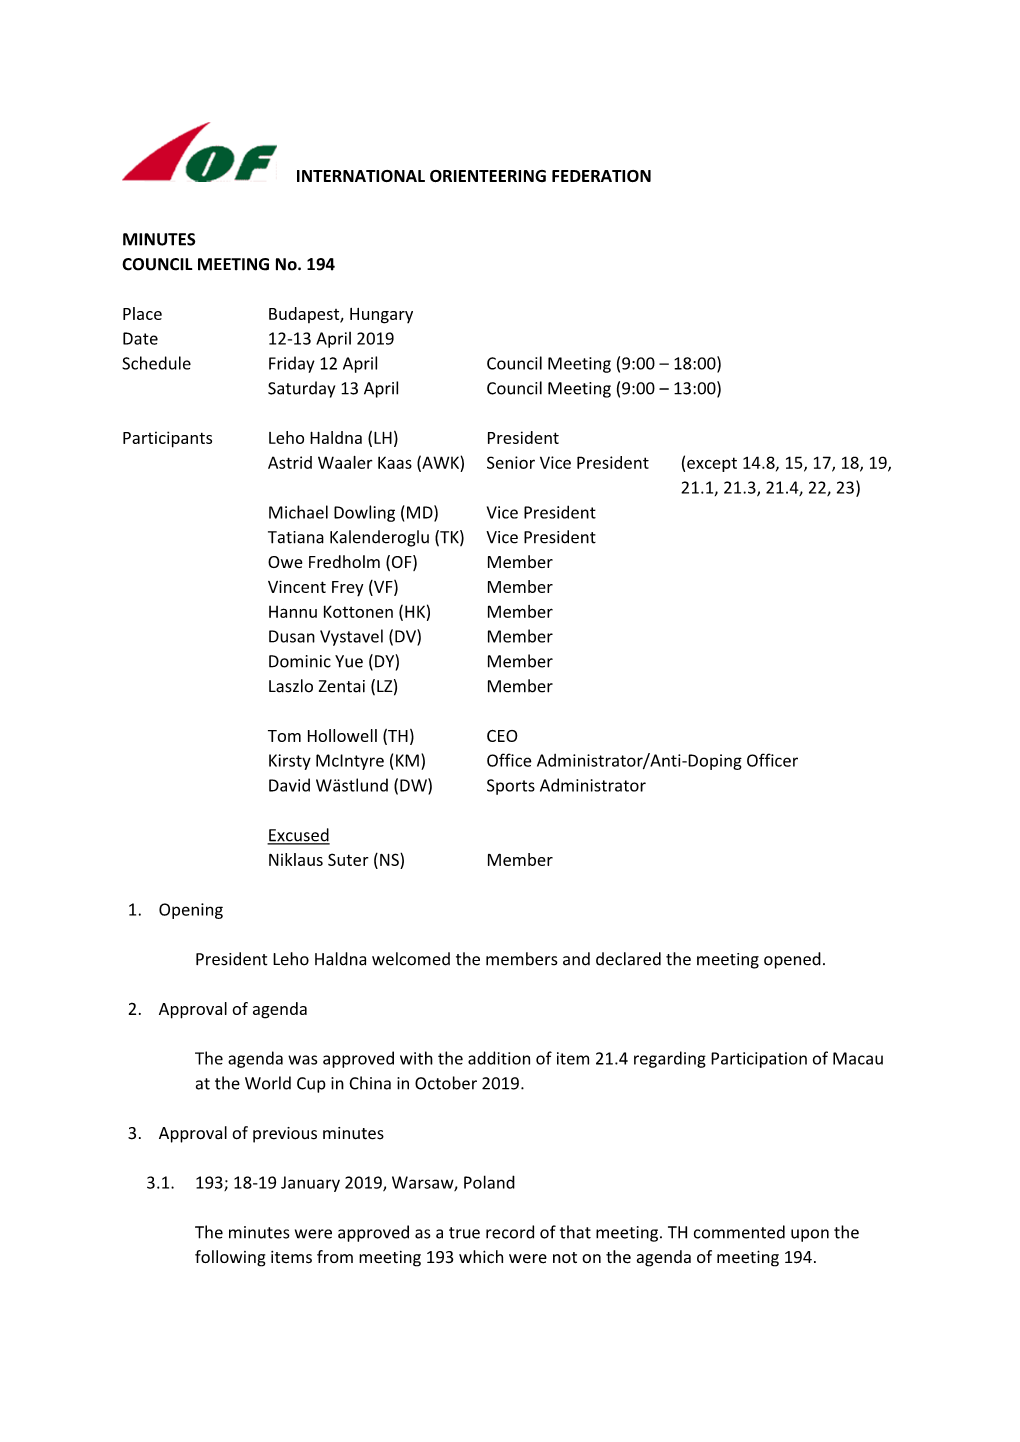 International Orienteering Federation Minutes Council